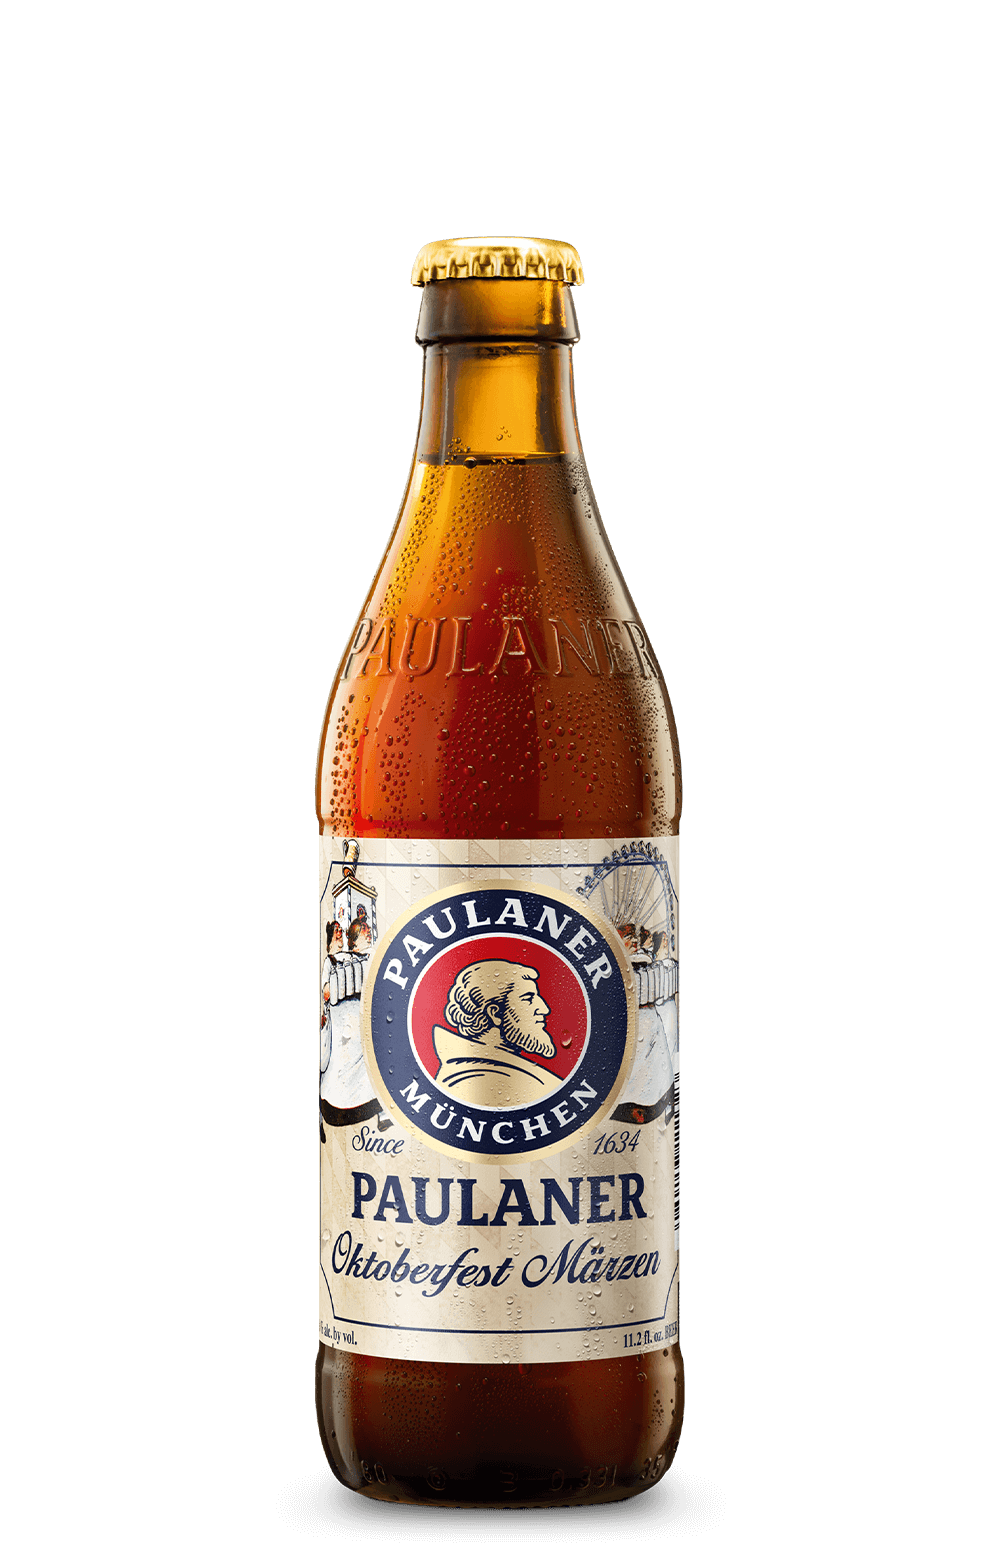 NEW Paulaner Bavarian / German Beer Glass 0.5 Liter "Weissbier" 